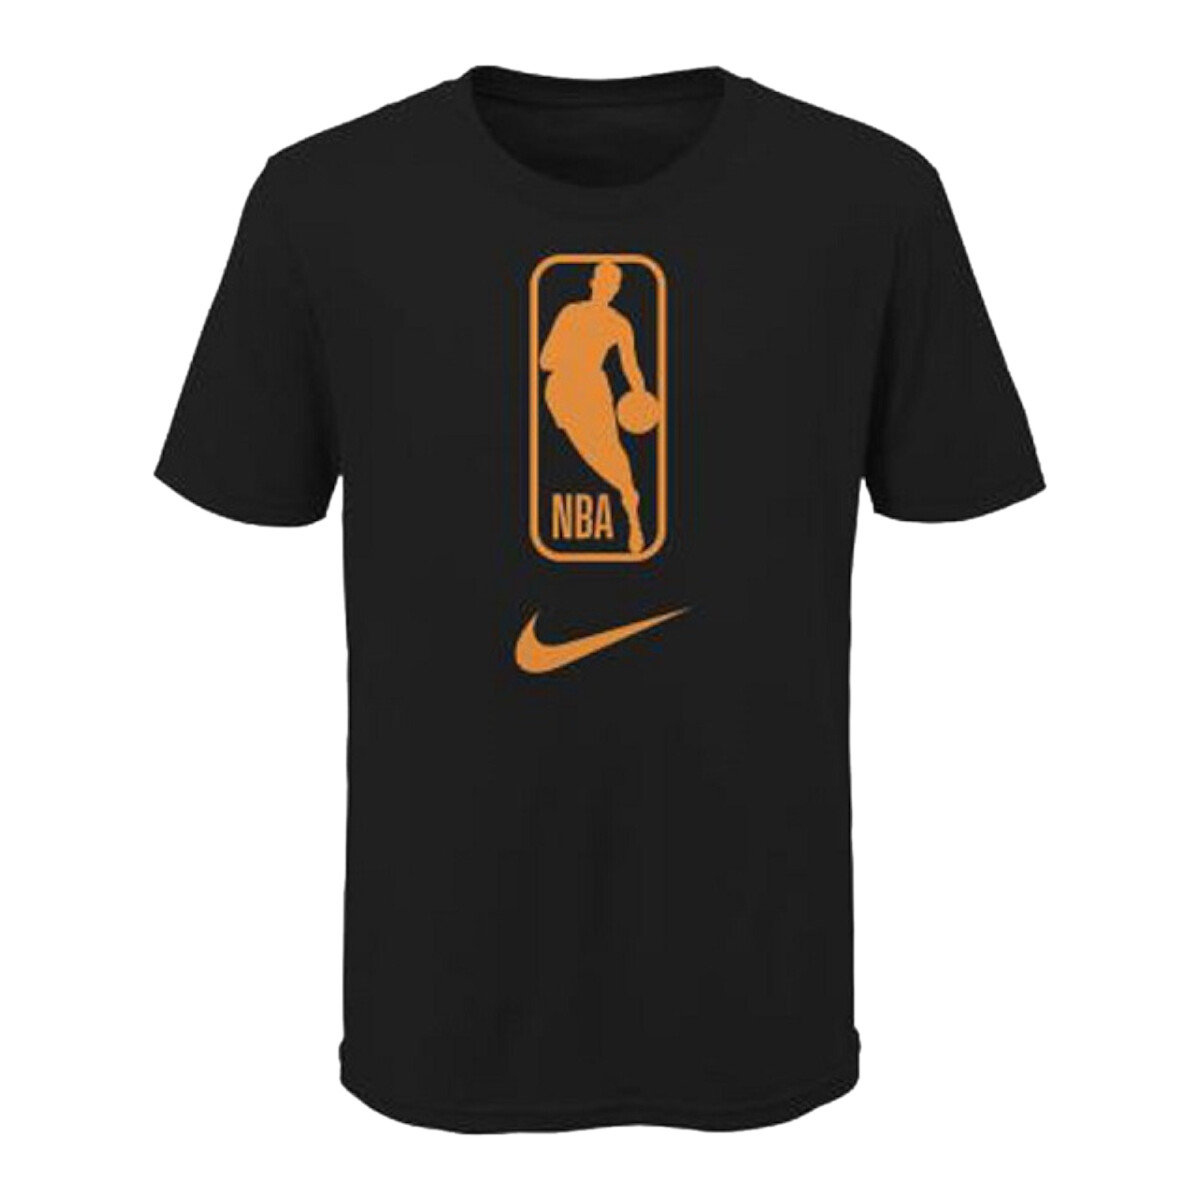 Textil Rapaz T-Shirt mangas curtas Nike NBA Team 31 SS Tee Preto